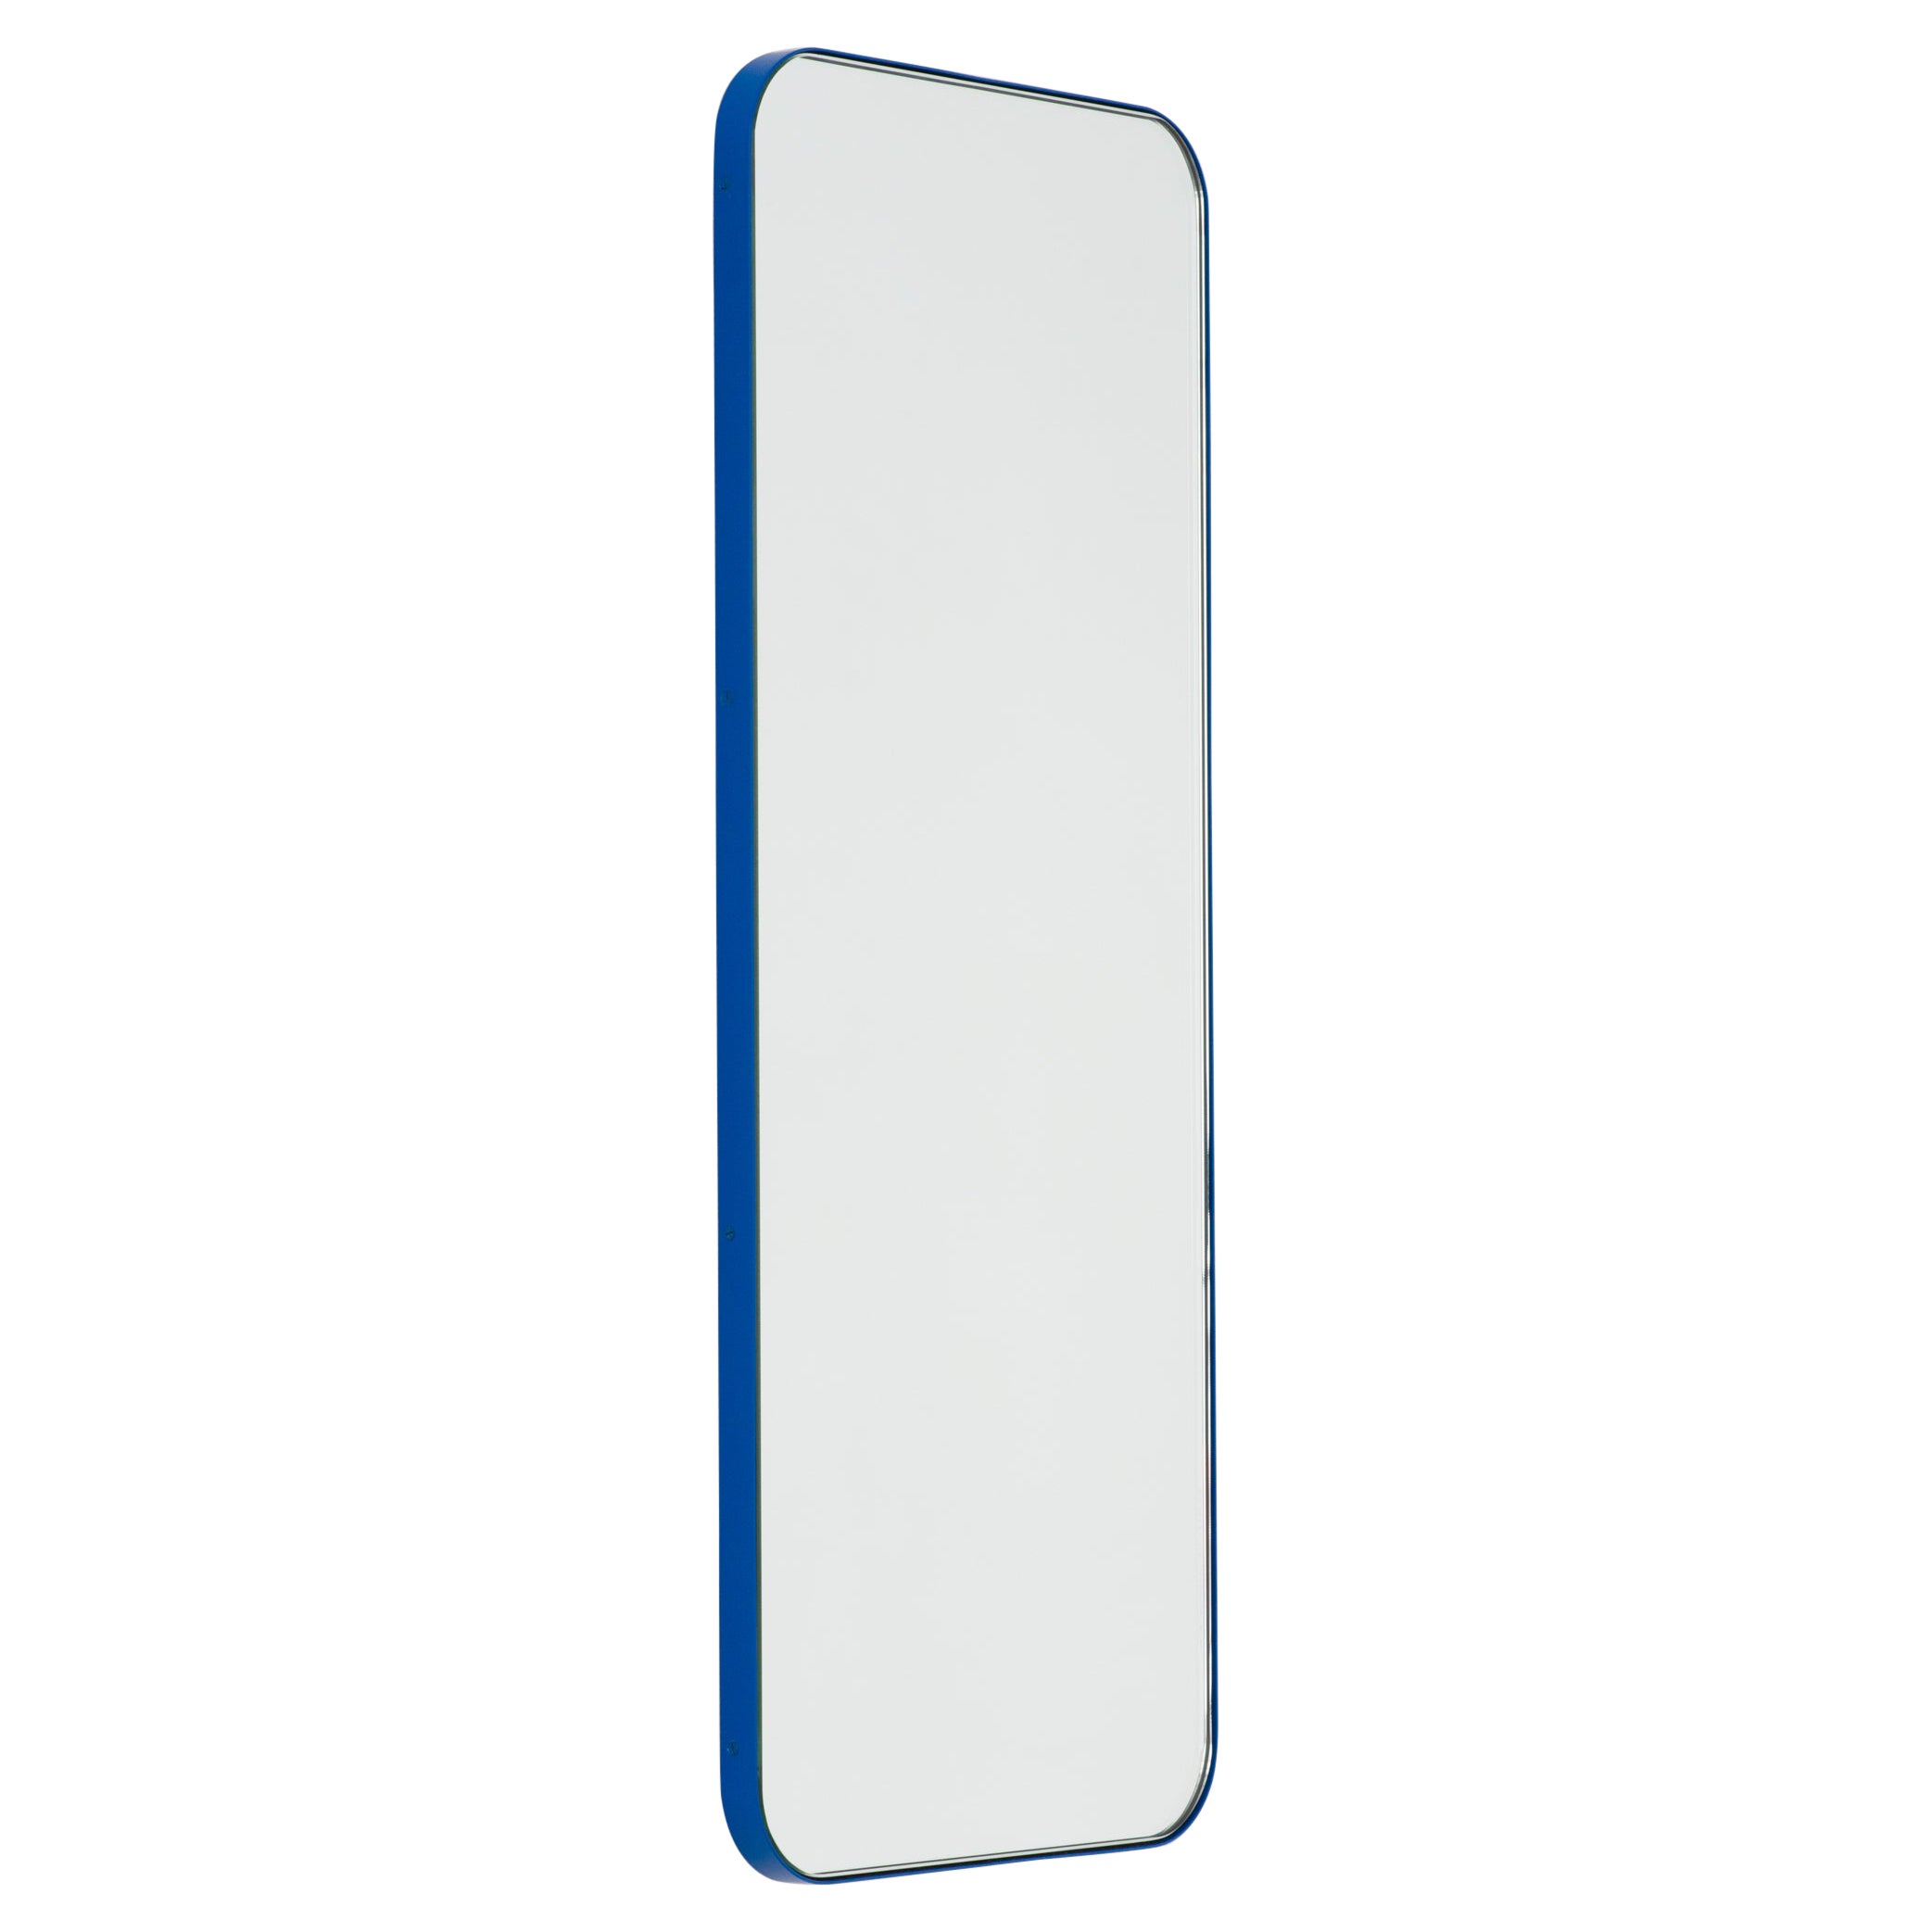 Quadris Rectangular Modern Wall Mirror with a Blue Frame, XL For Sale